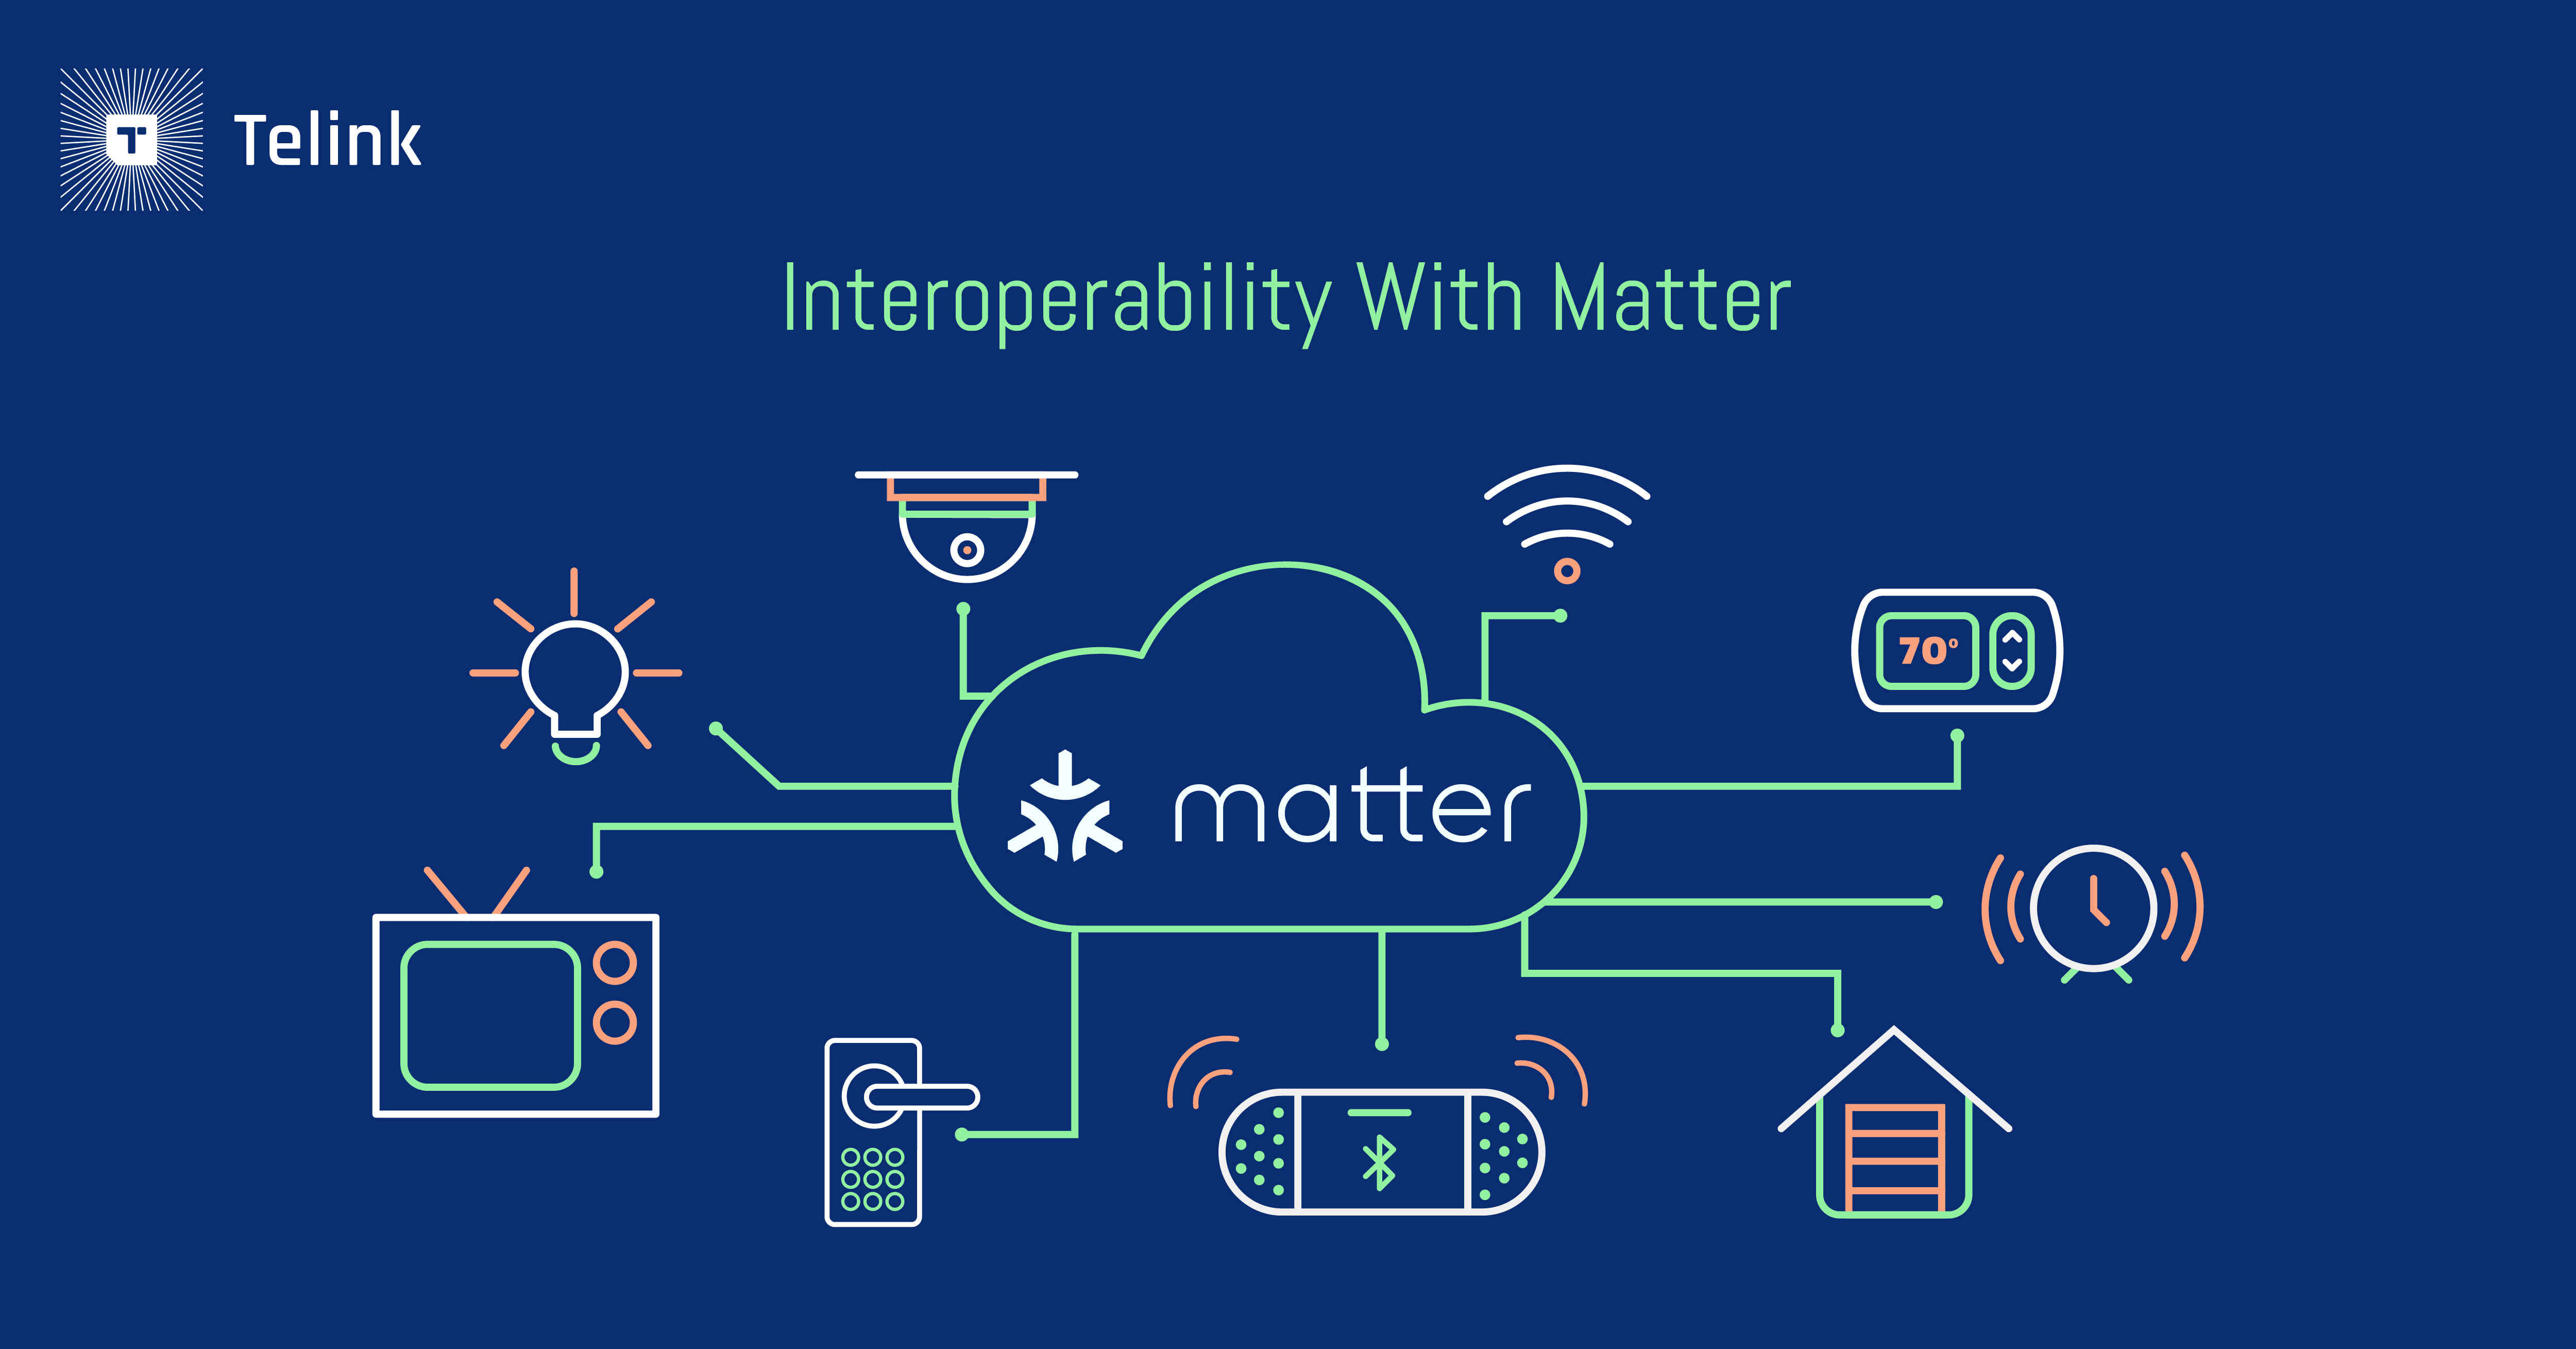 Interoperability with Matter standard